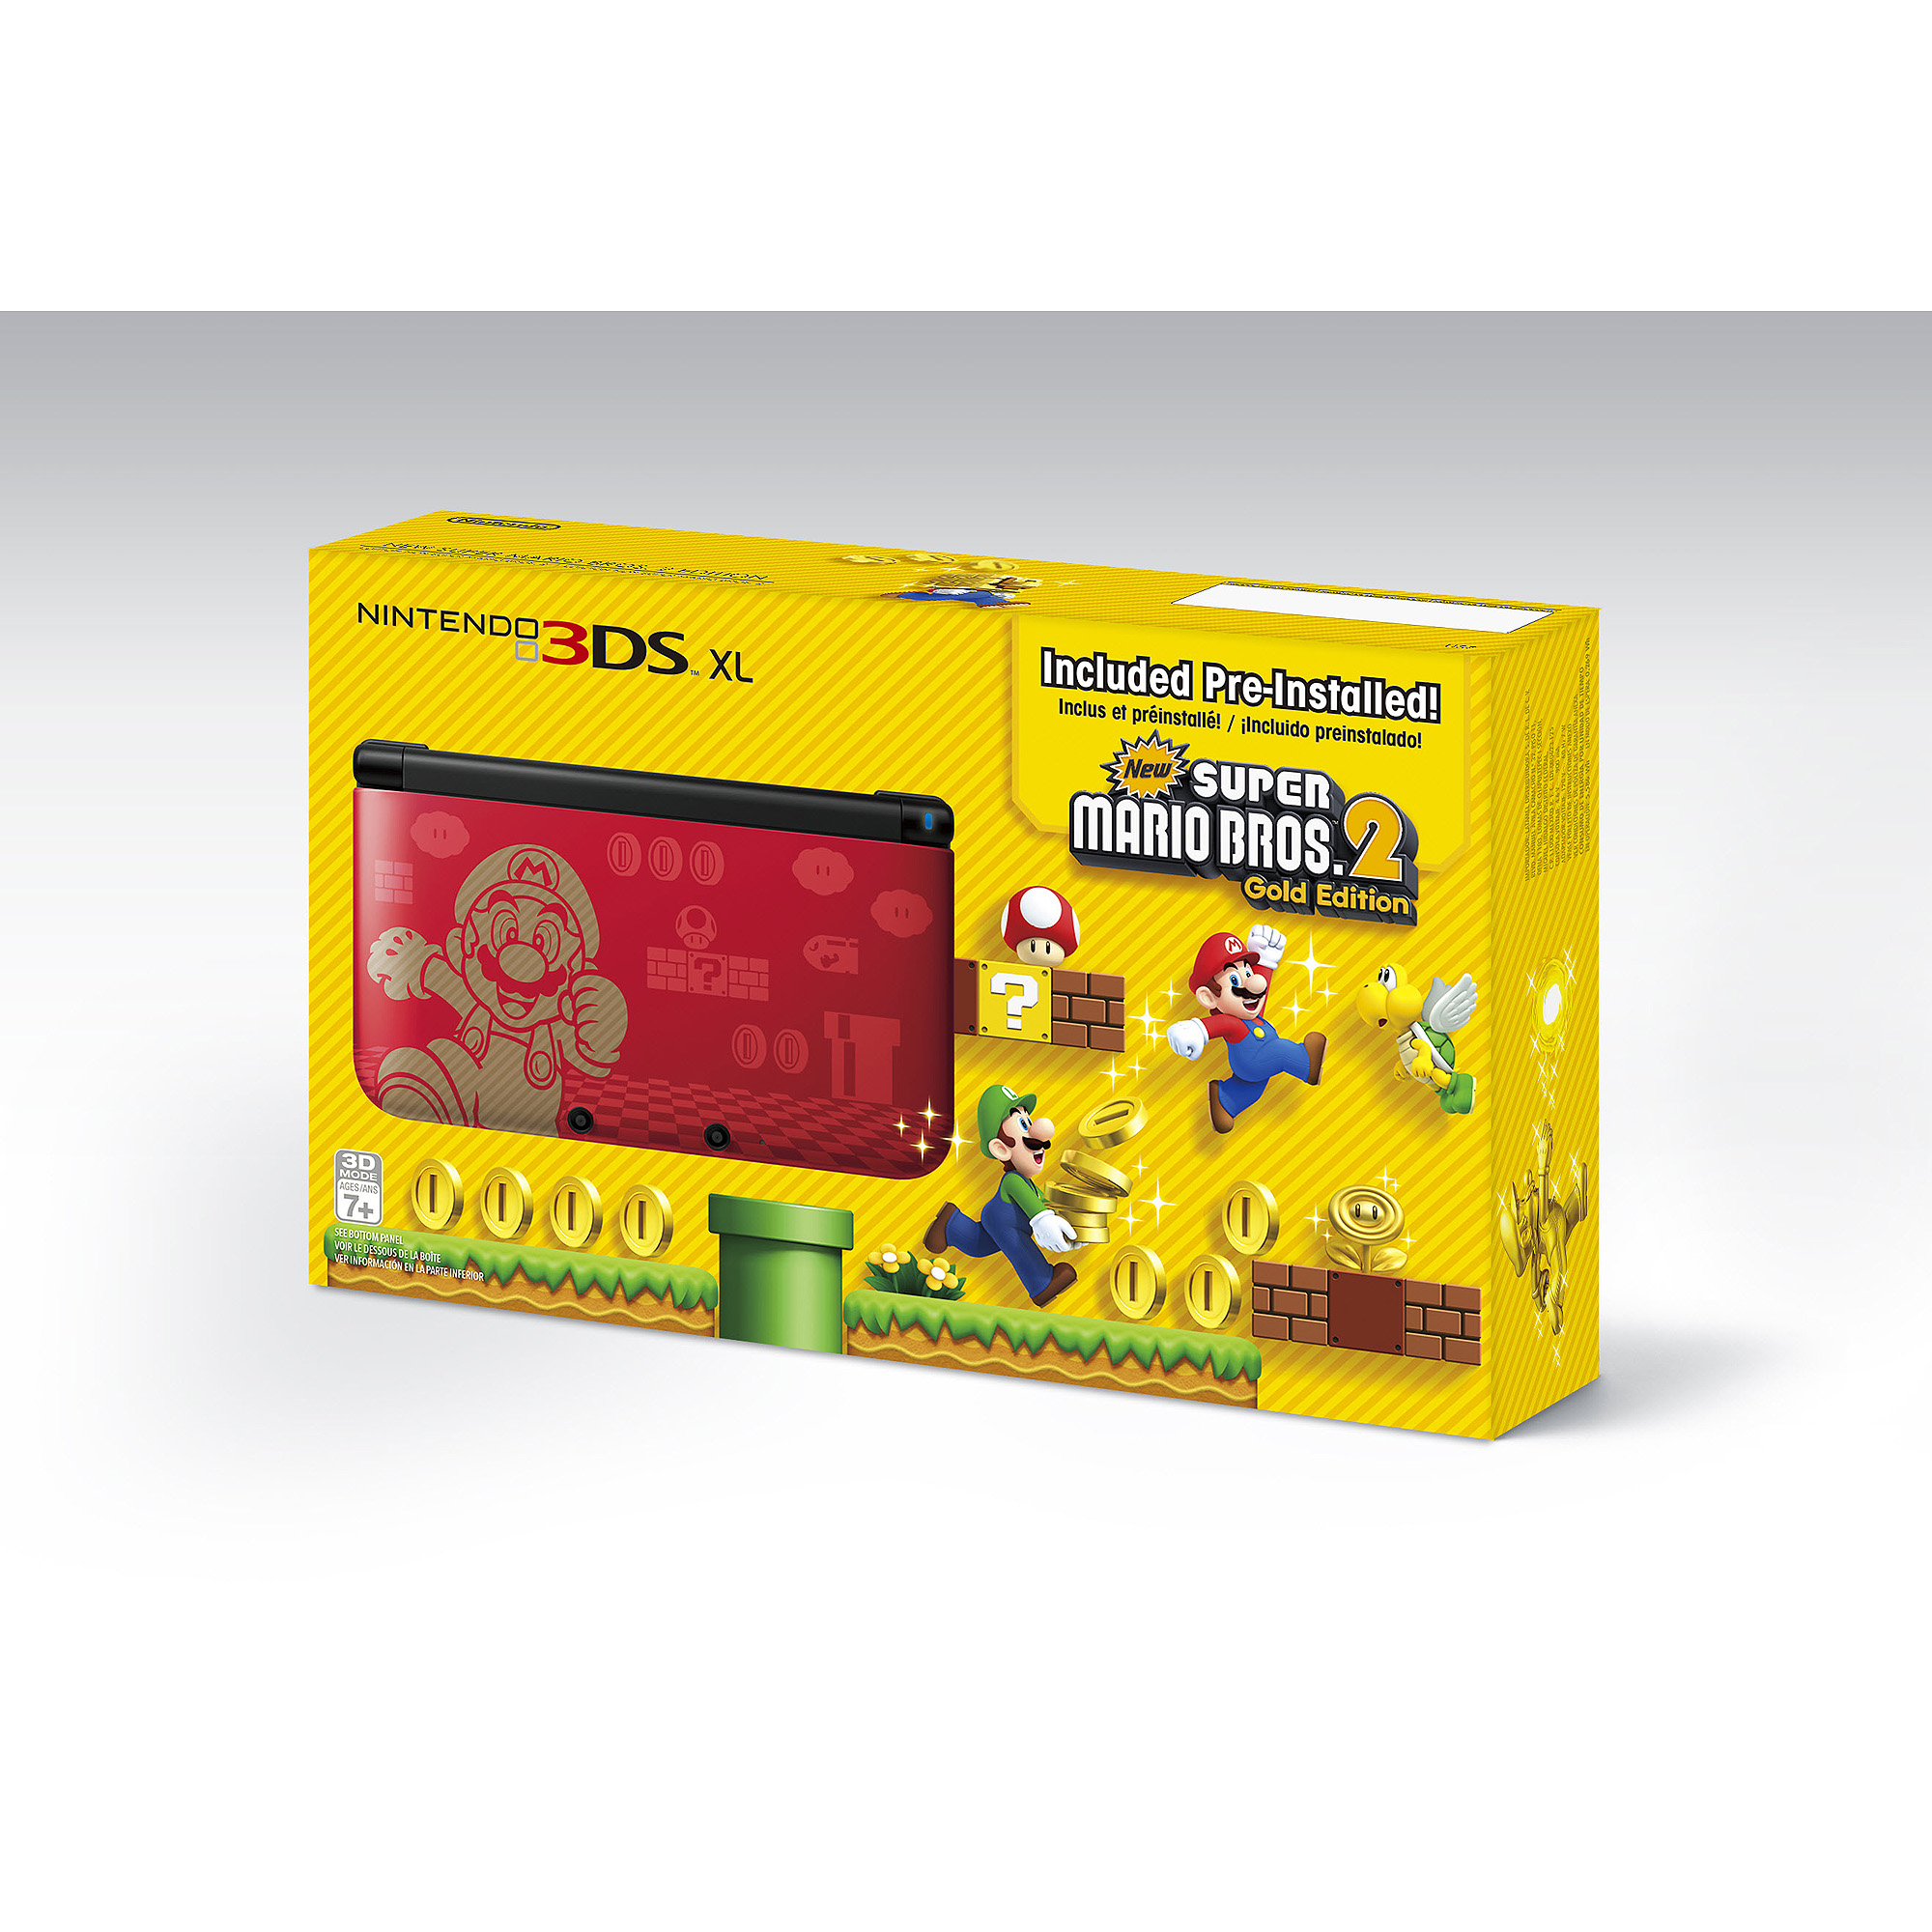 Nintendo New Super Mario Bros. 2 Gold Edition Nintendo 3DS XL - image 3 of 3